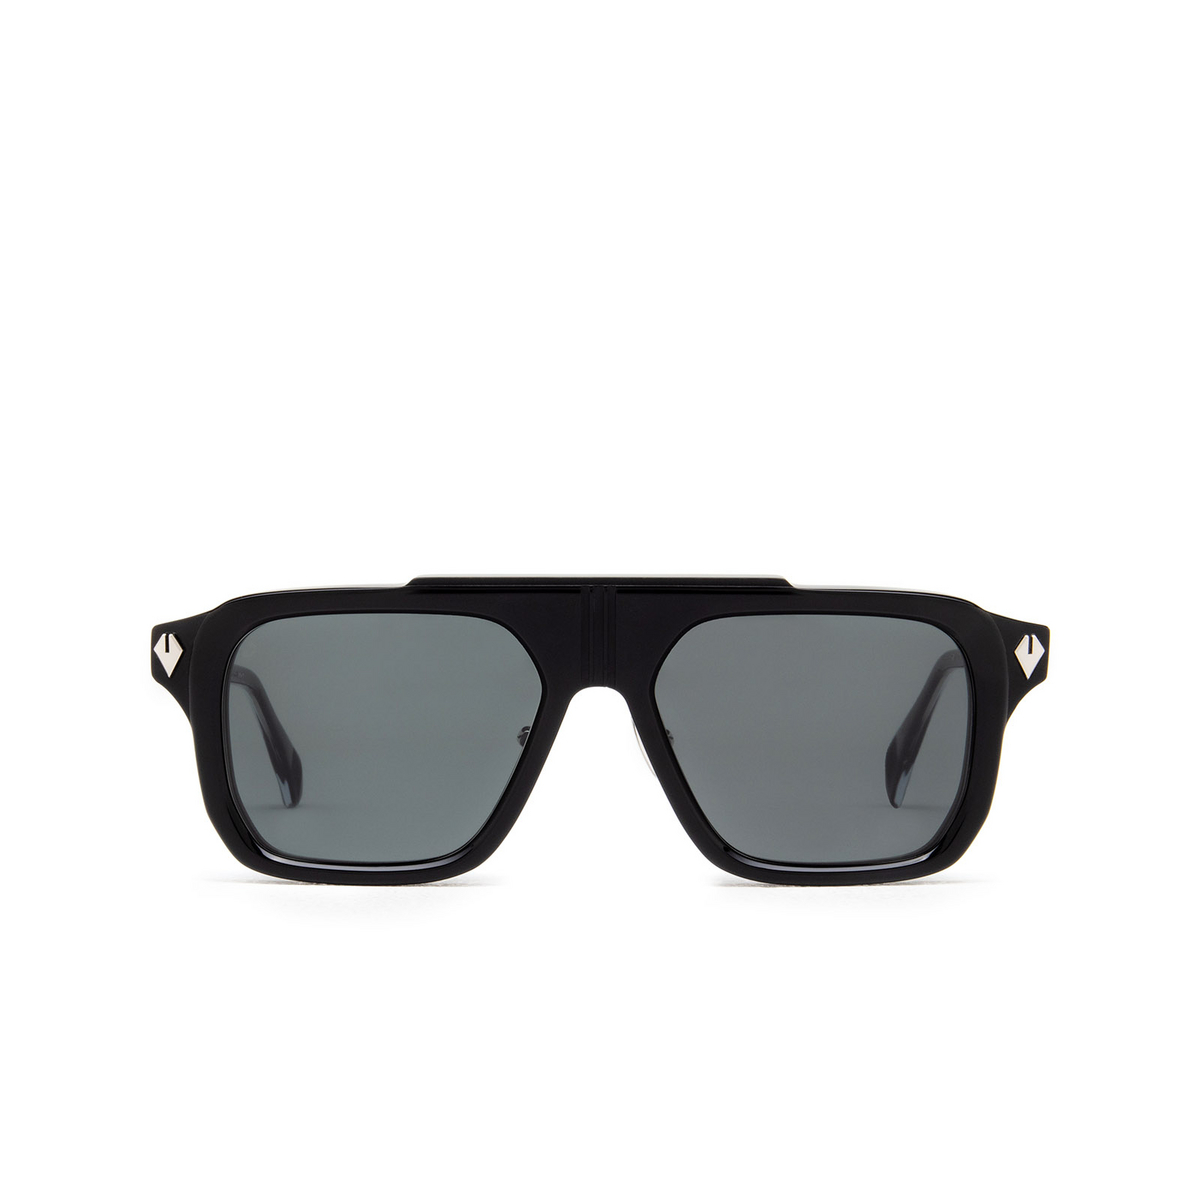 T Henri EVO Sunglasses SHADOW - front view